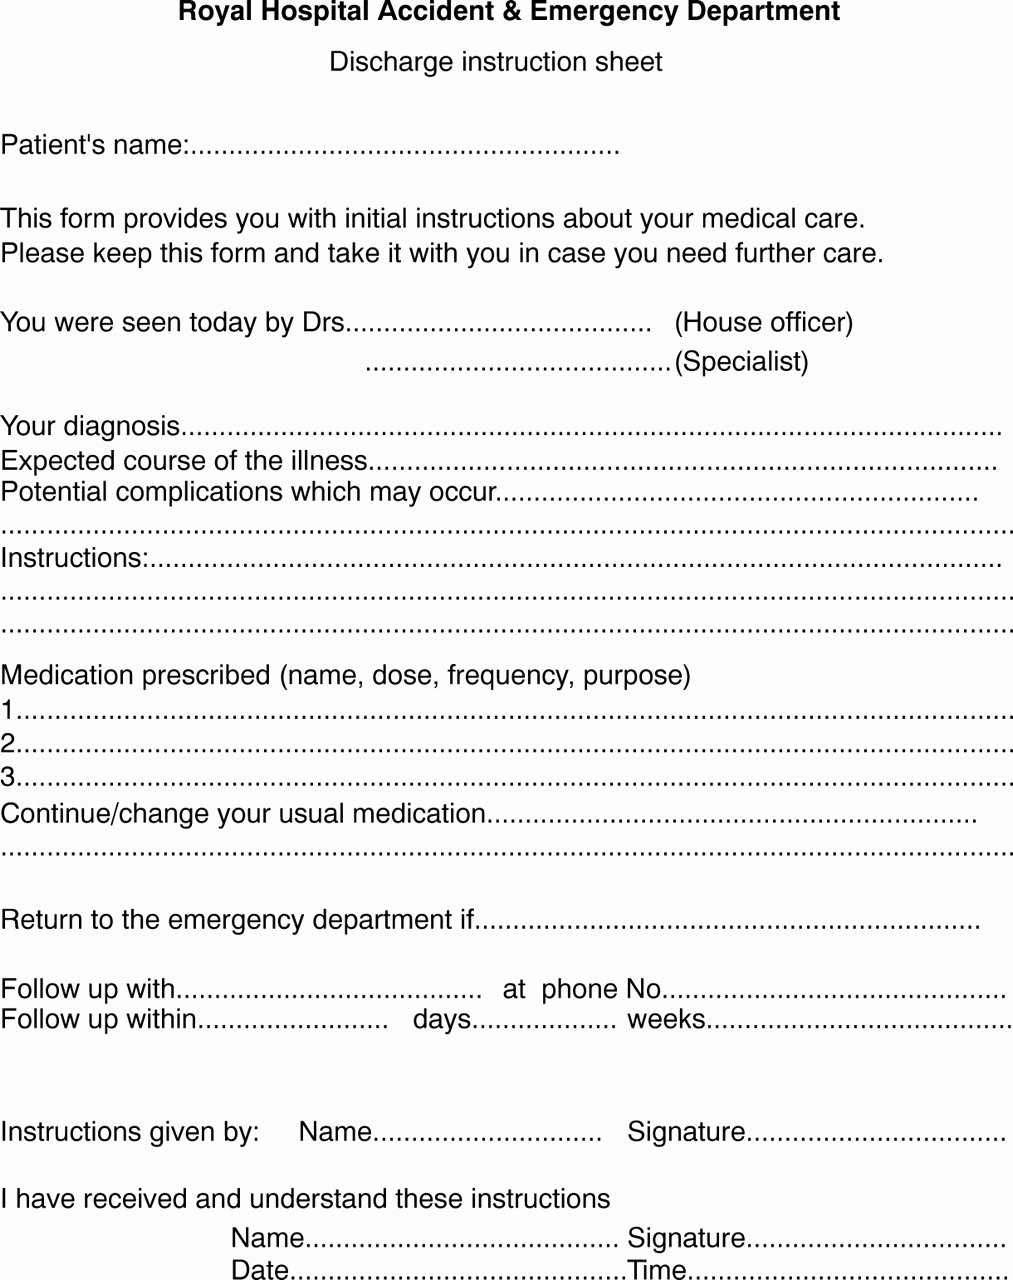 Patient Discharge form Template Unique Discharge Instructions for Emergency Department Patients